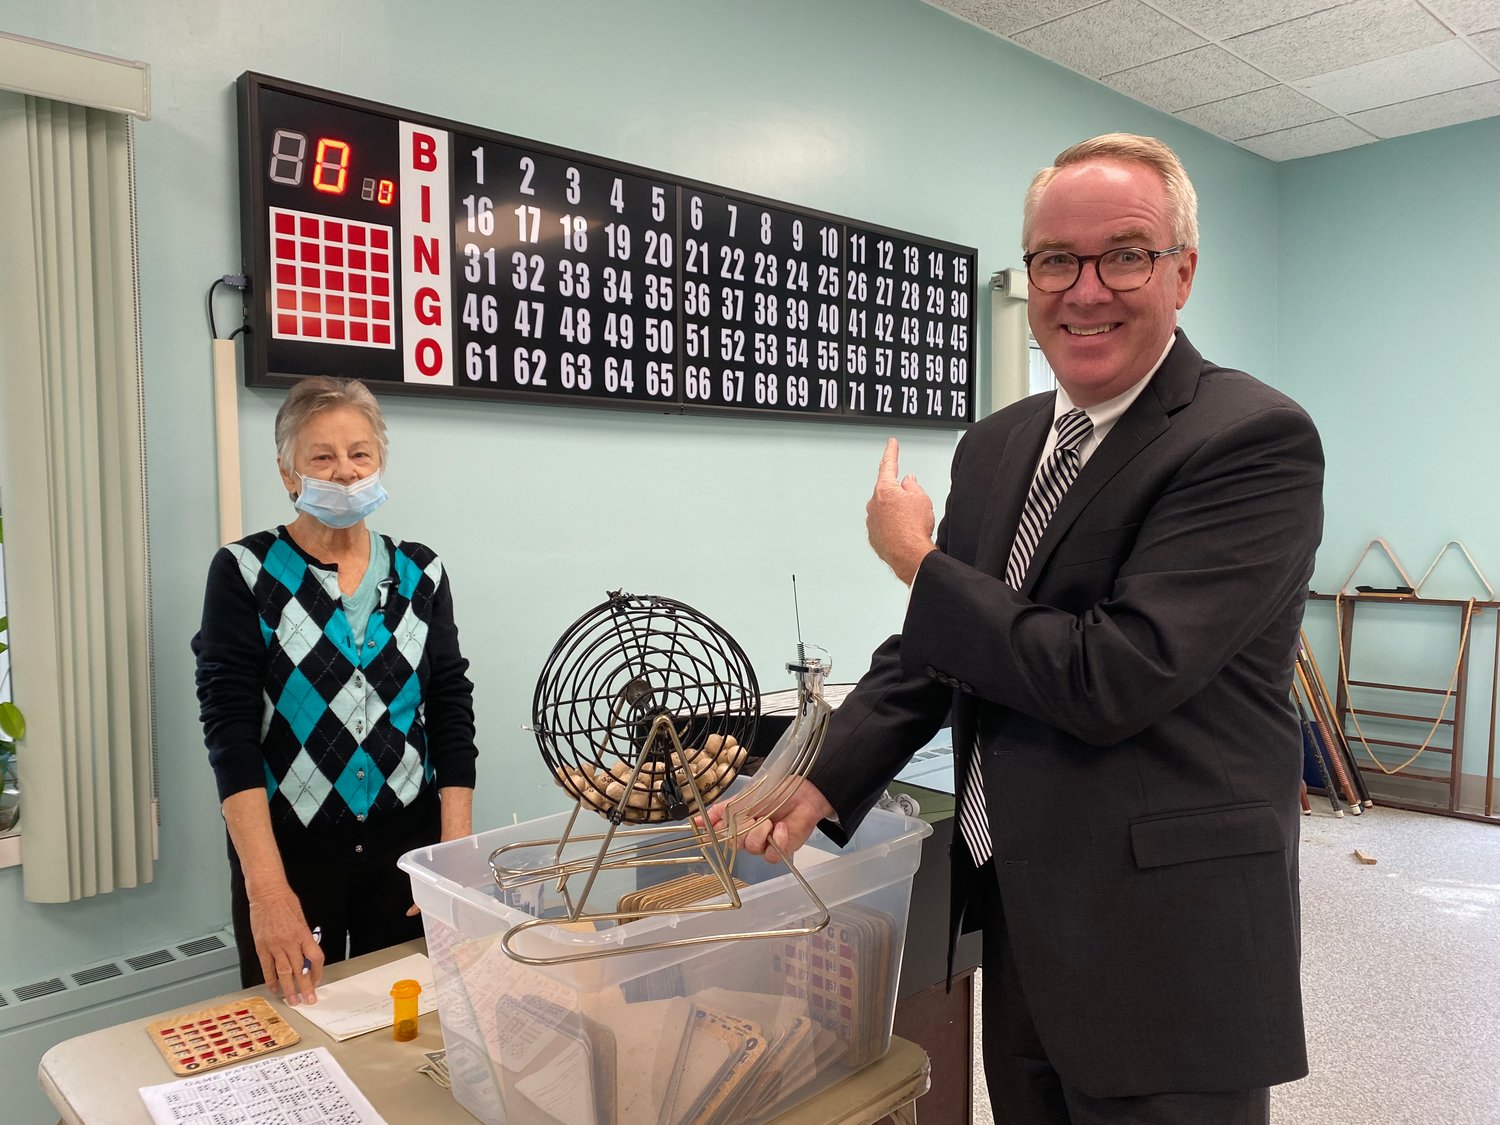 Town of Hempstead Supervisor Clavin showcased the new bingo machine next to the old hand-cranked machine.